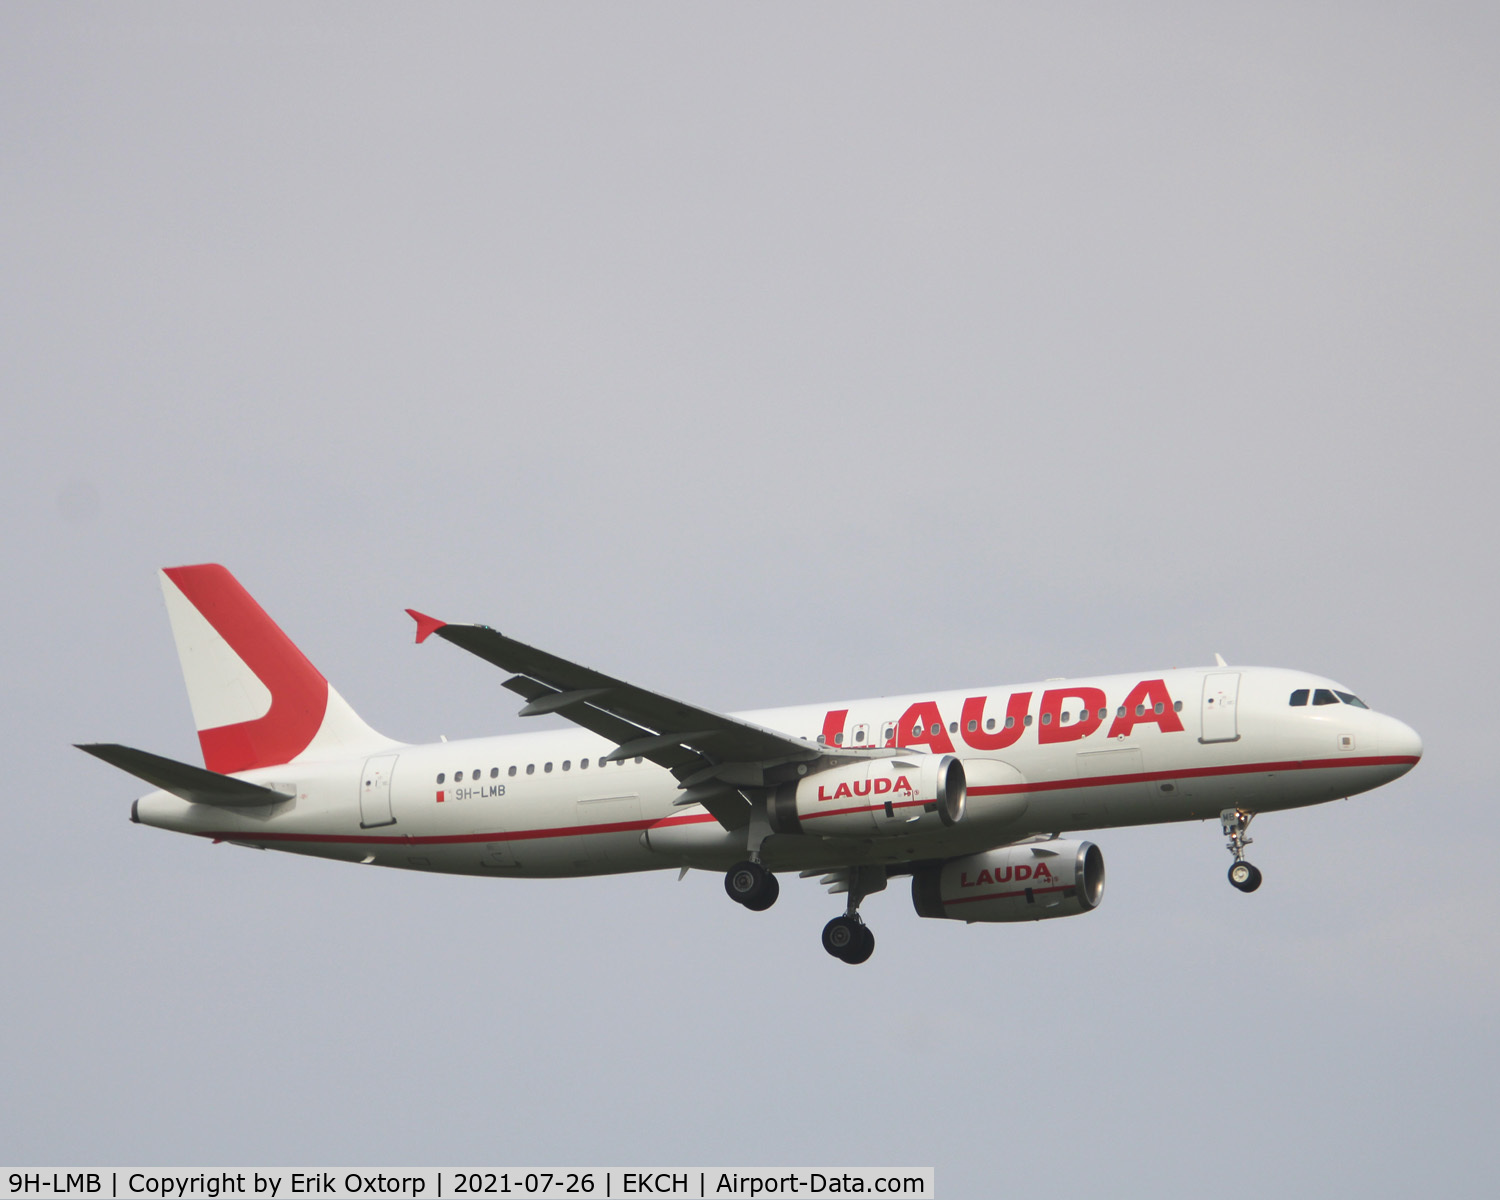 9H-LMB, 2006 Airbus A320-232 C/N 2859, 9H-LMB landing rw 04L